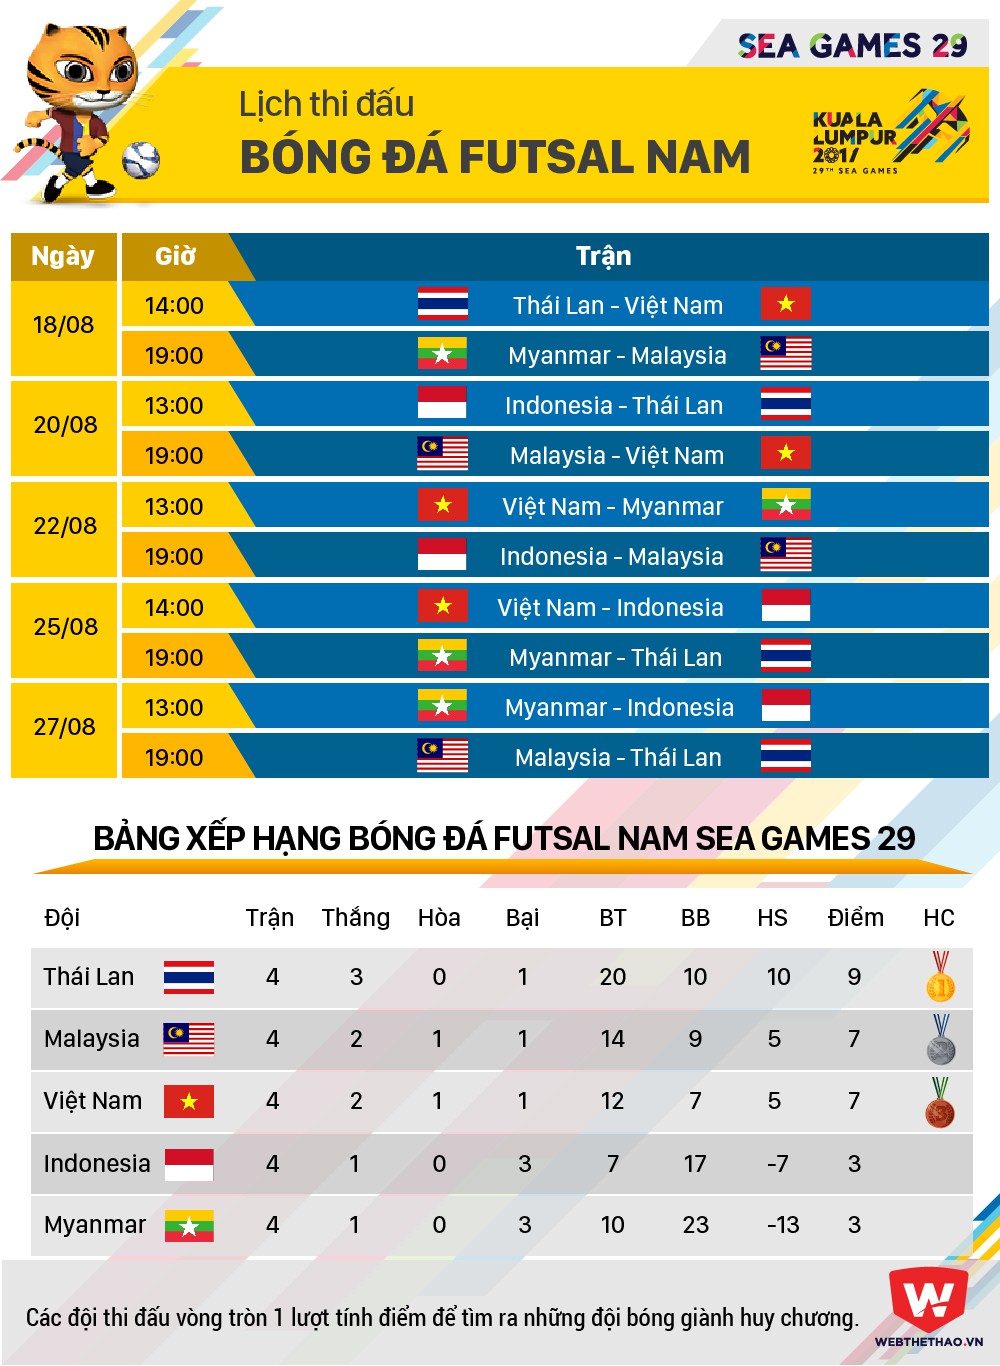 Lịch thi đấu futsal nam SEA Games 29